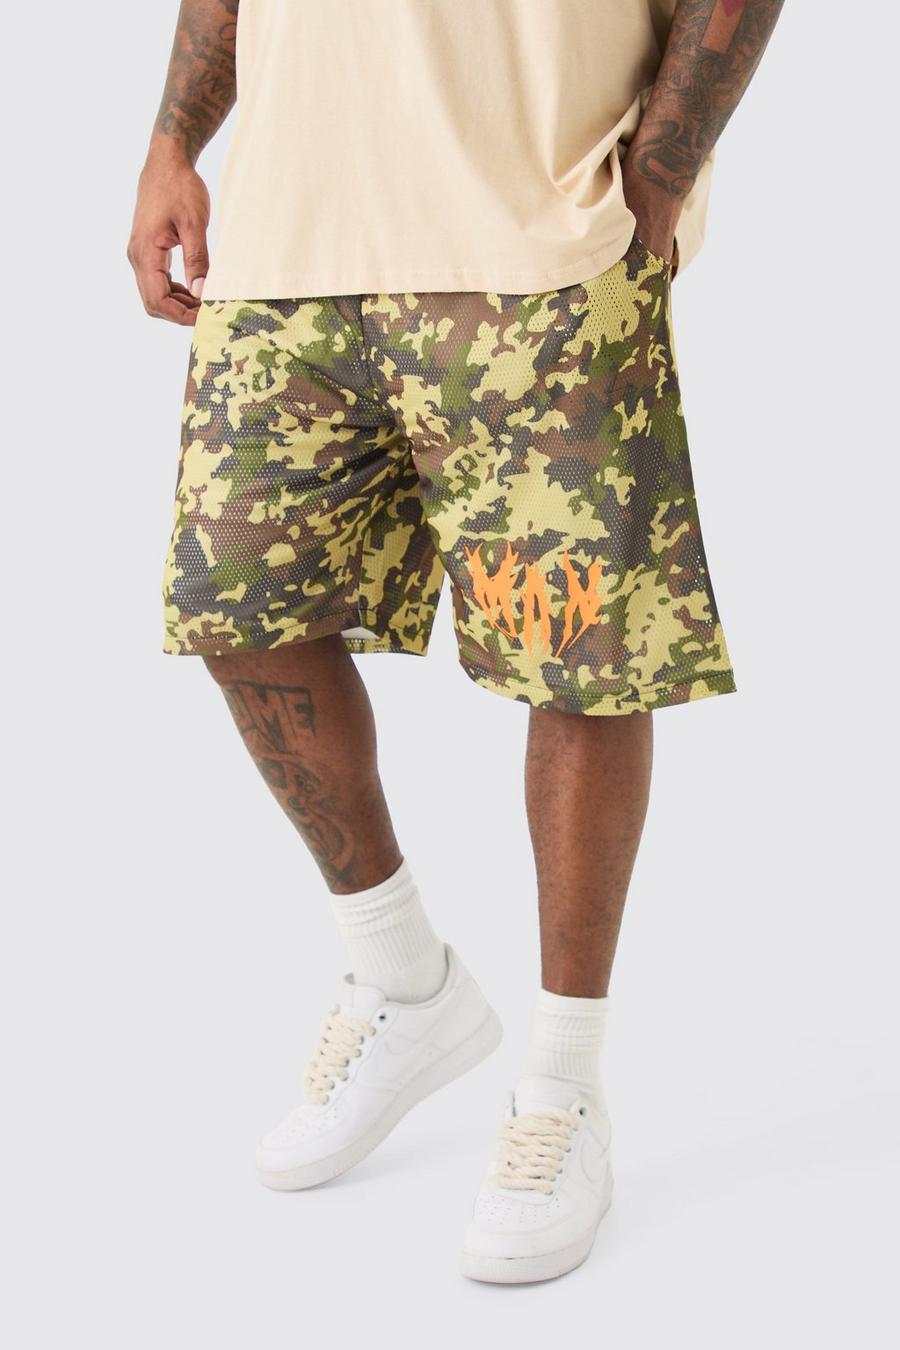 Plus Man Mesh Camouflage Basketball-Shorts, Multi